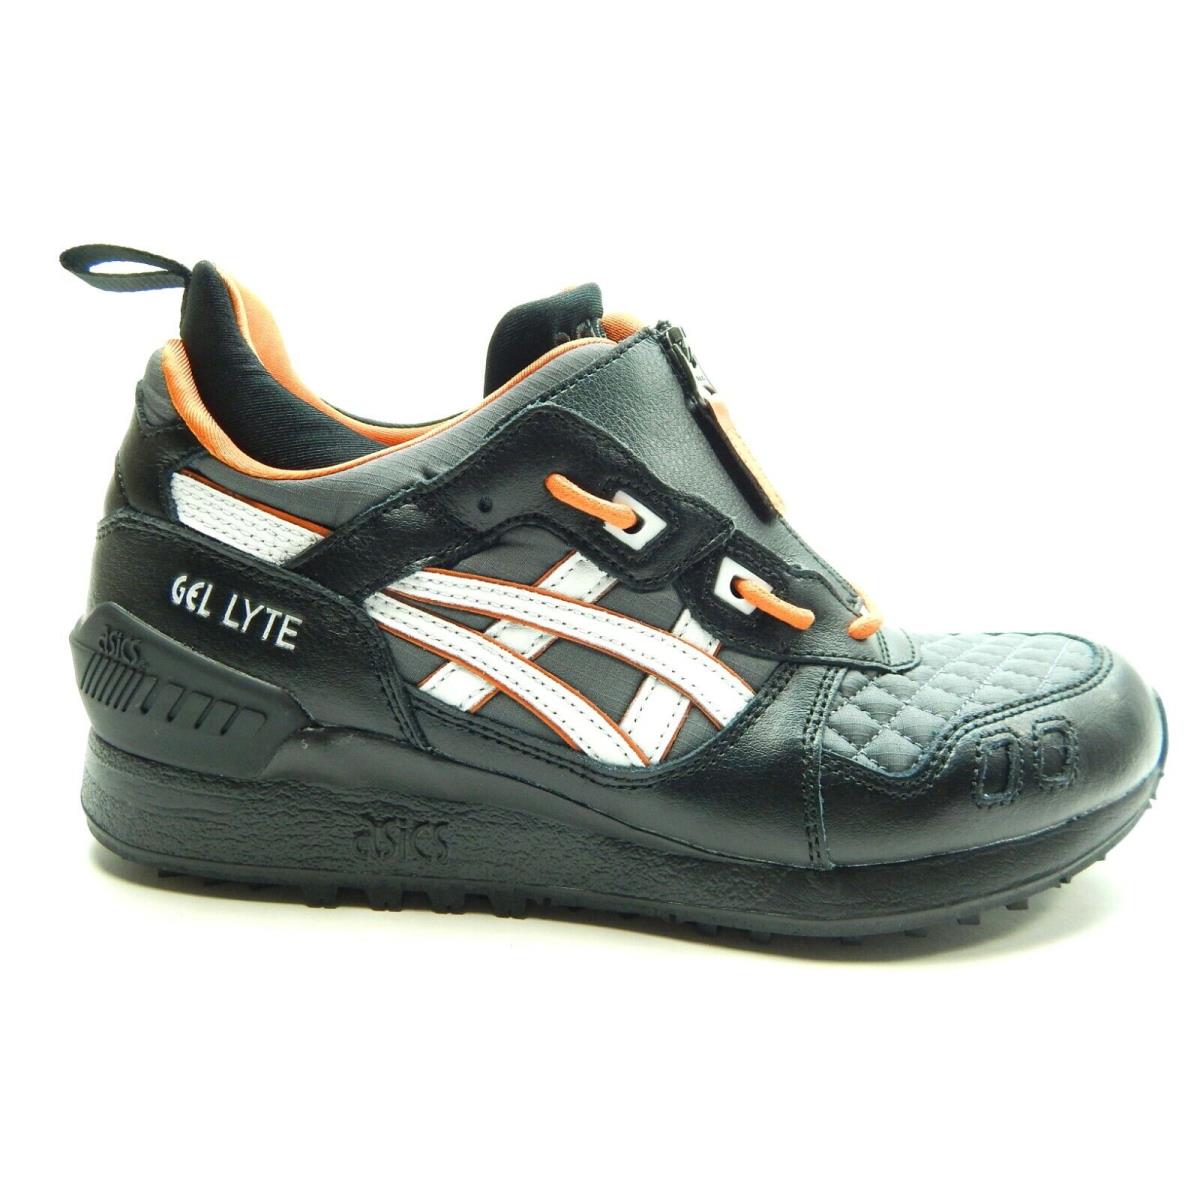 Asics Gel Lyte MT Black White Men Shoes Size 7.5 - White